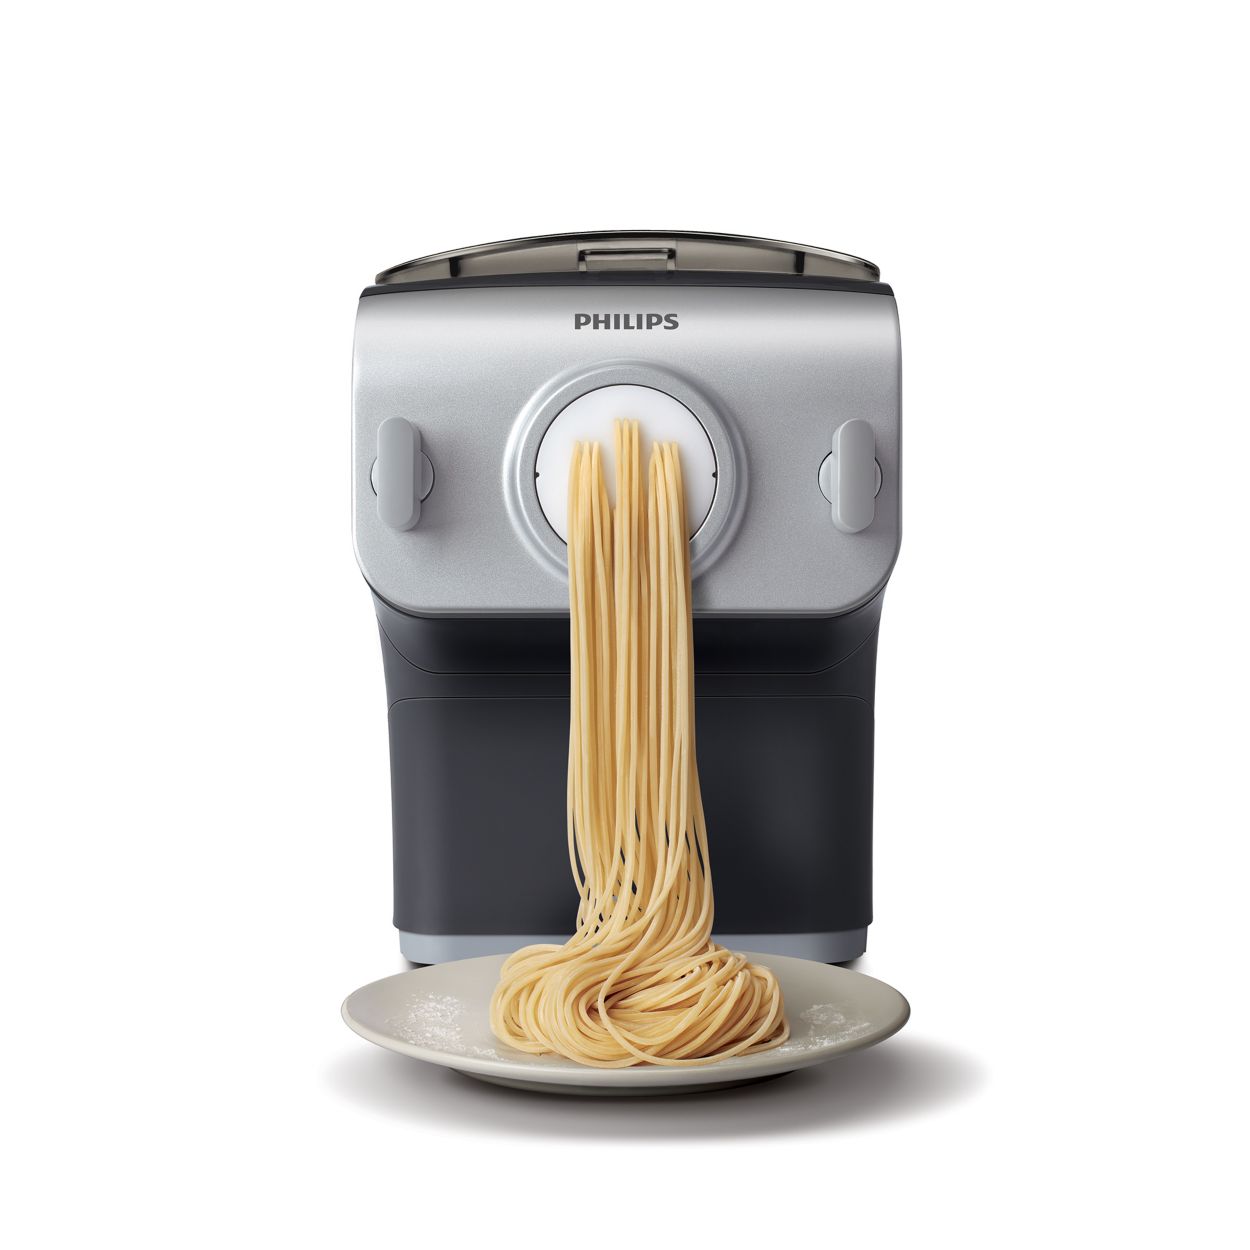 Philips HR2357/05 Avance Pasta Maker Review 